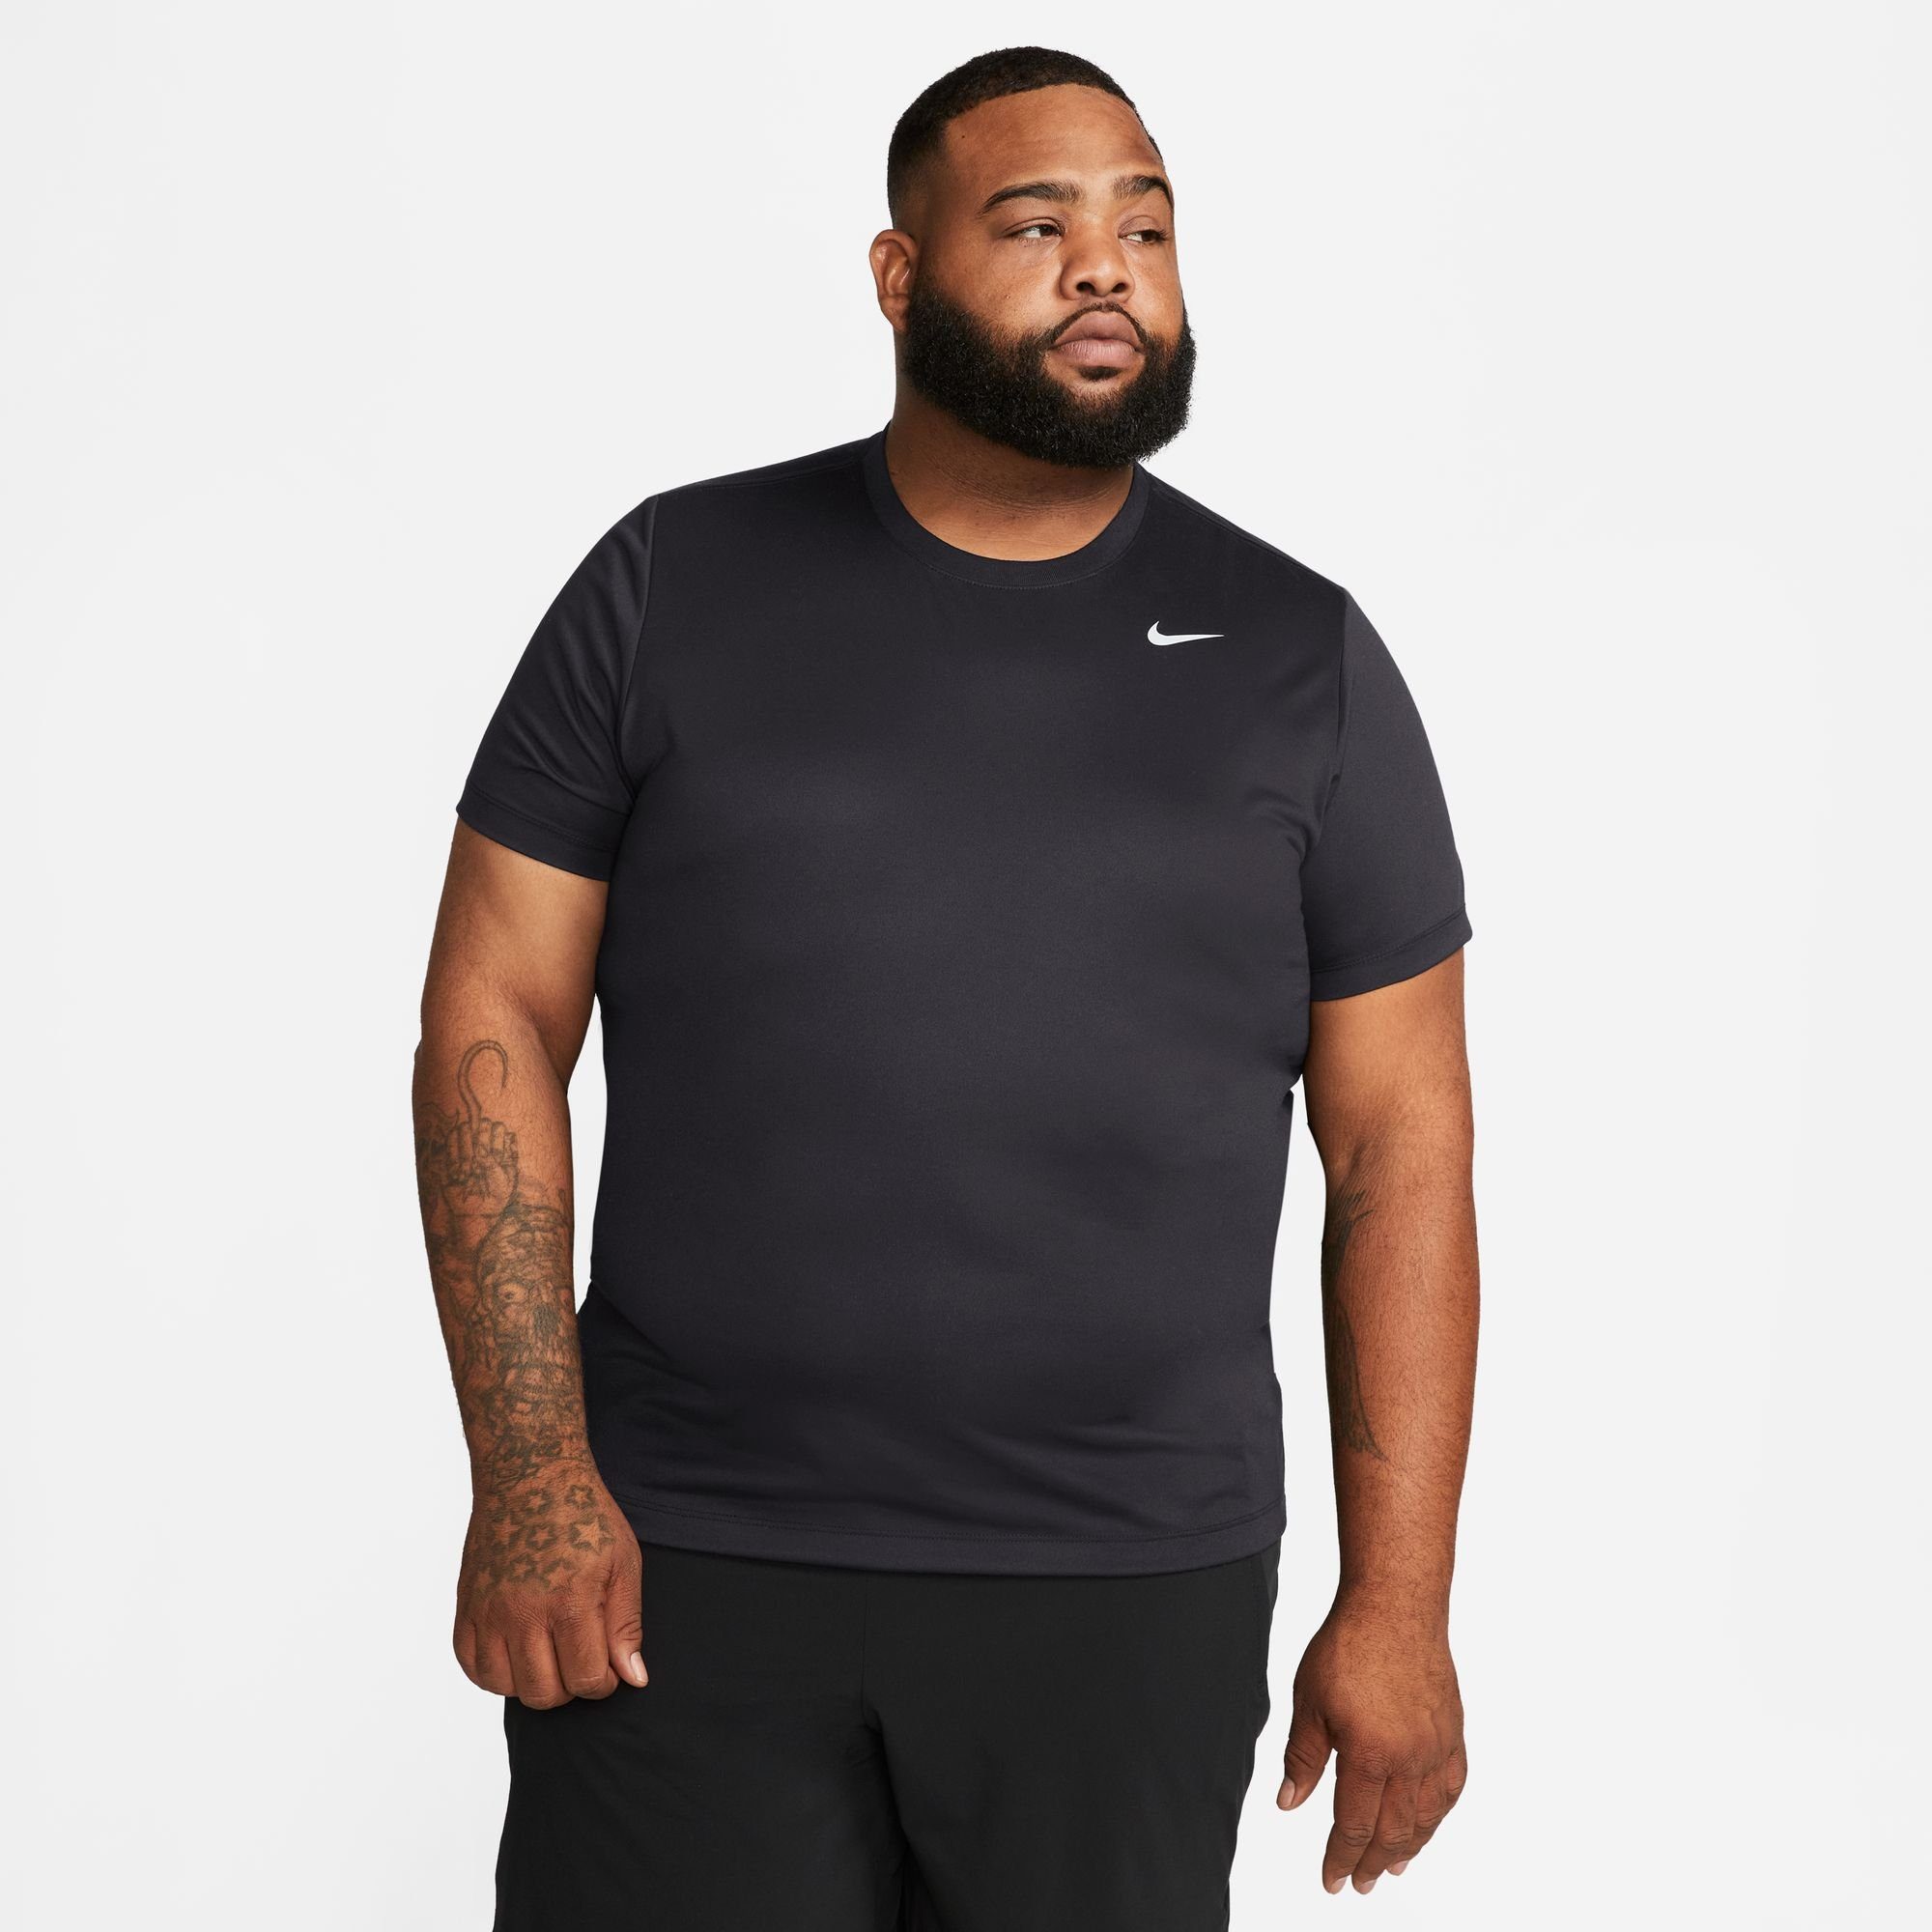 Nike SILVER BLACK/MATTE FITNESS LEGEND MEN'S Trainingsshirt DRI-FIT T-SHIRT